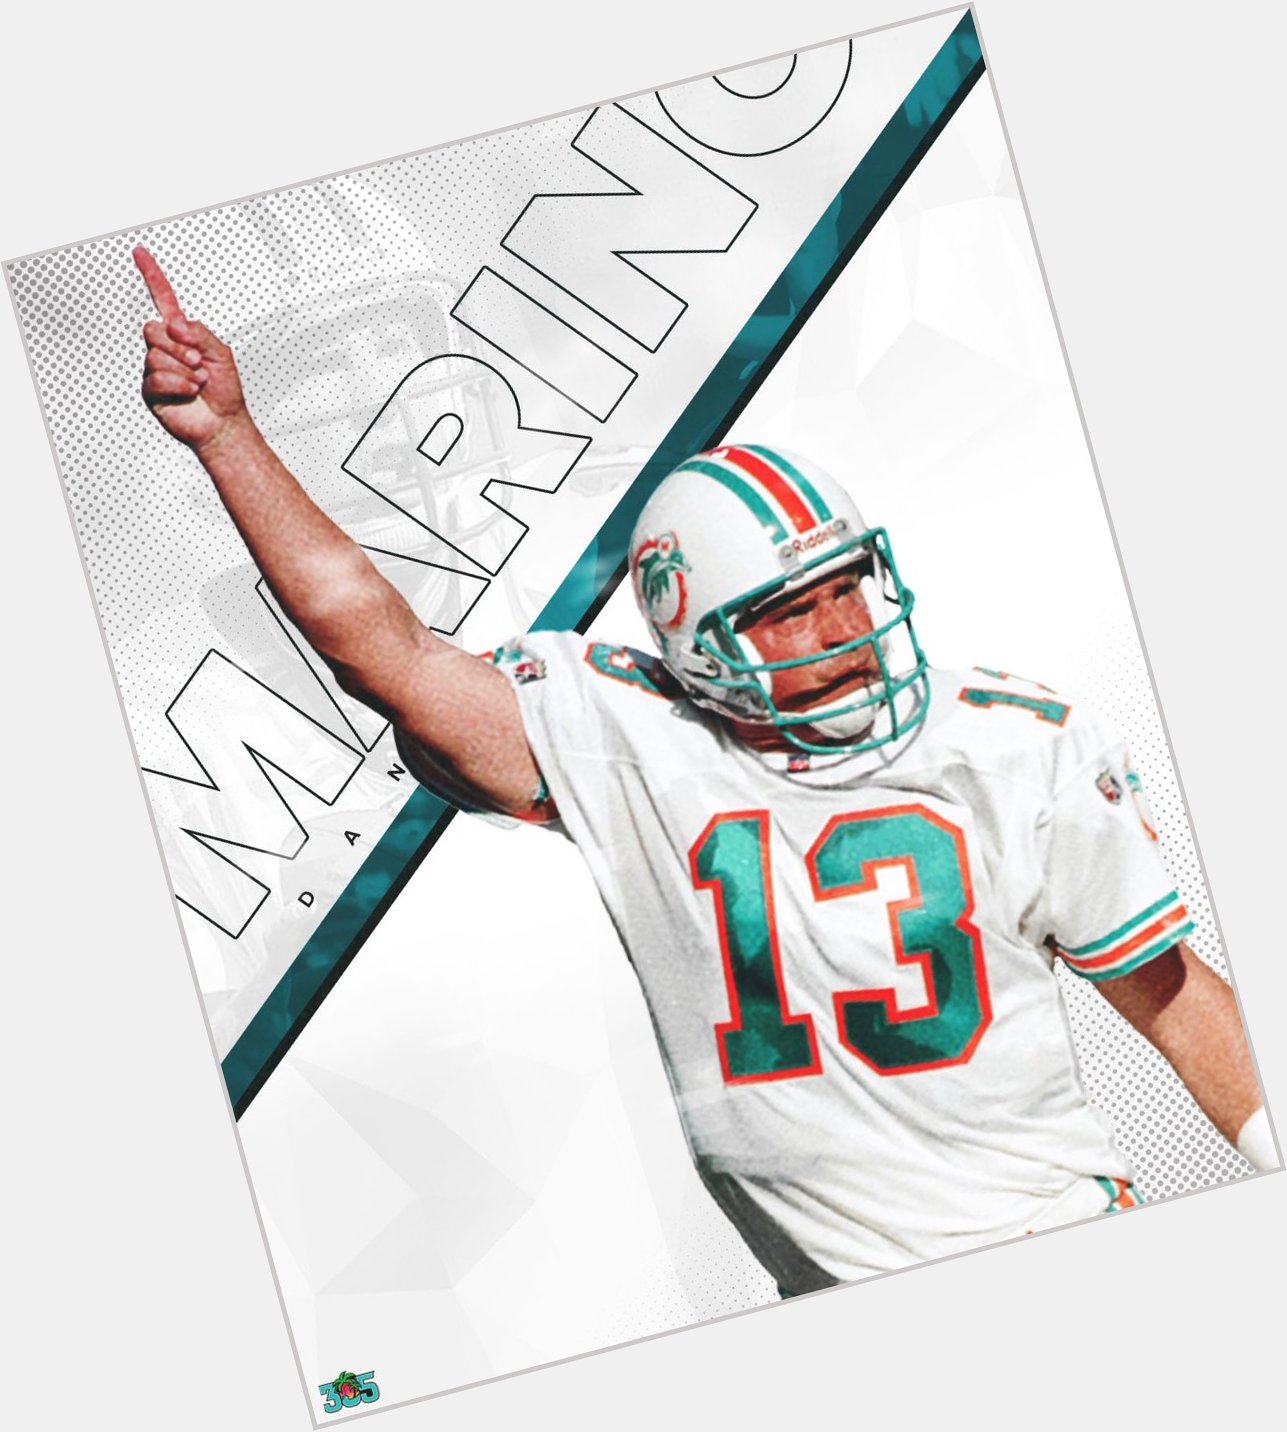 Happy 59th birthday to Dan Marino, the greatest quarterback in Miami Dolphins history. 